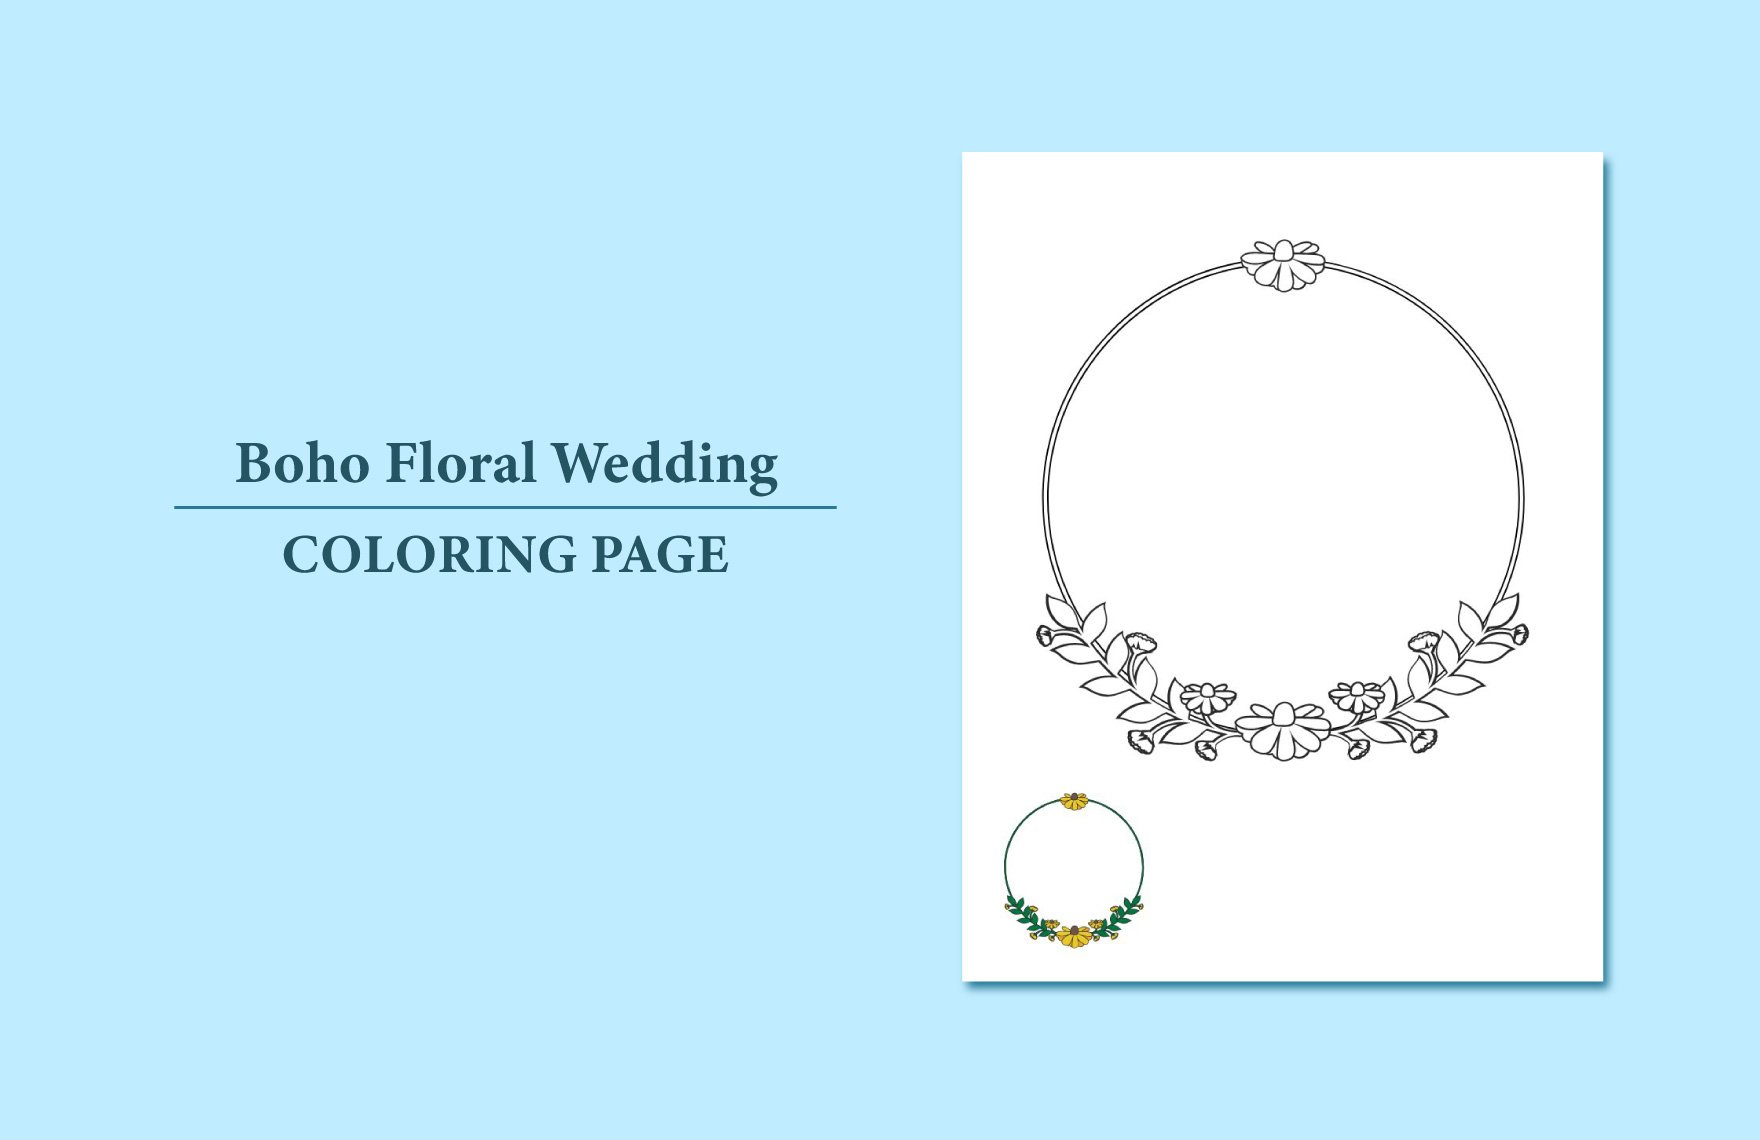 Boho Floral Wedding Coloring Page